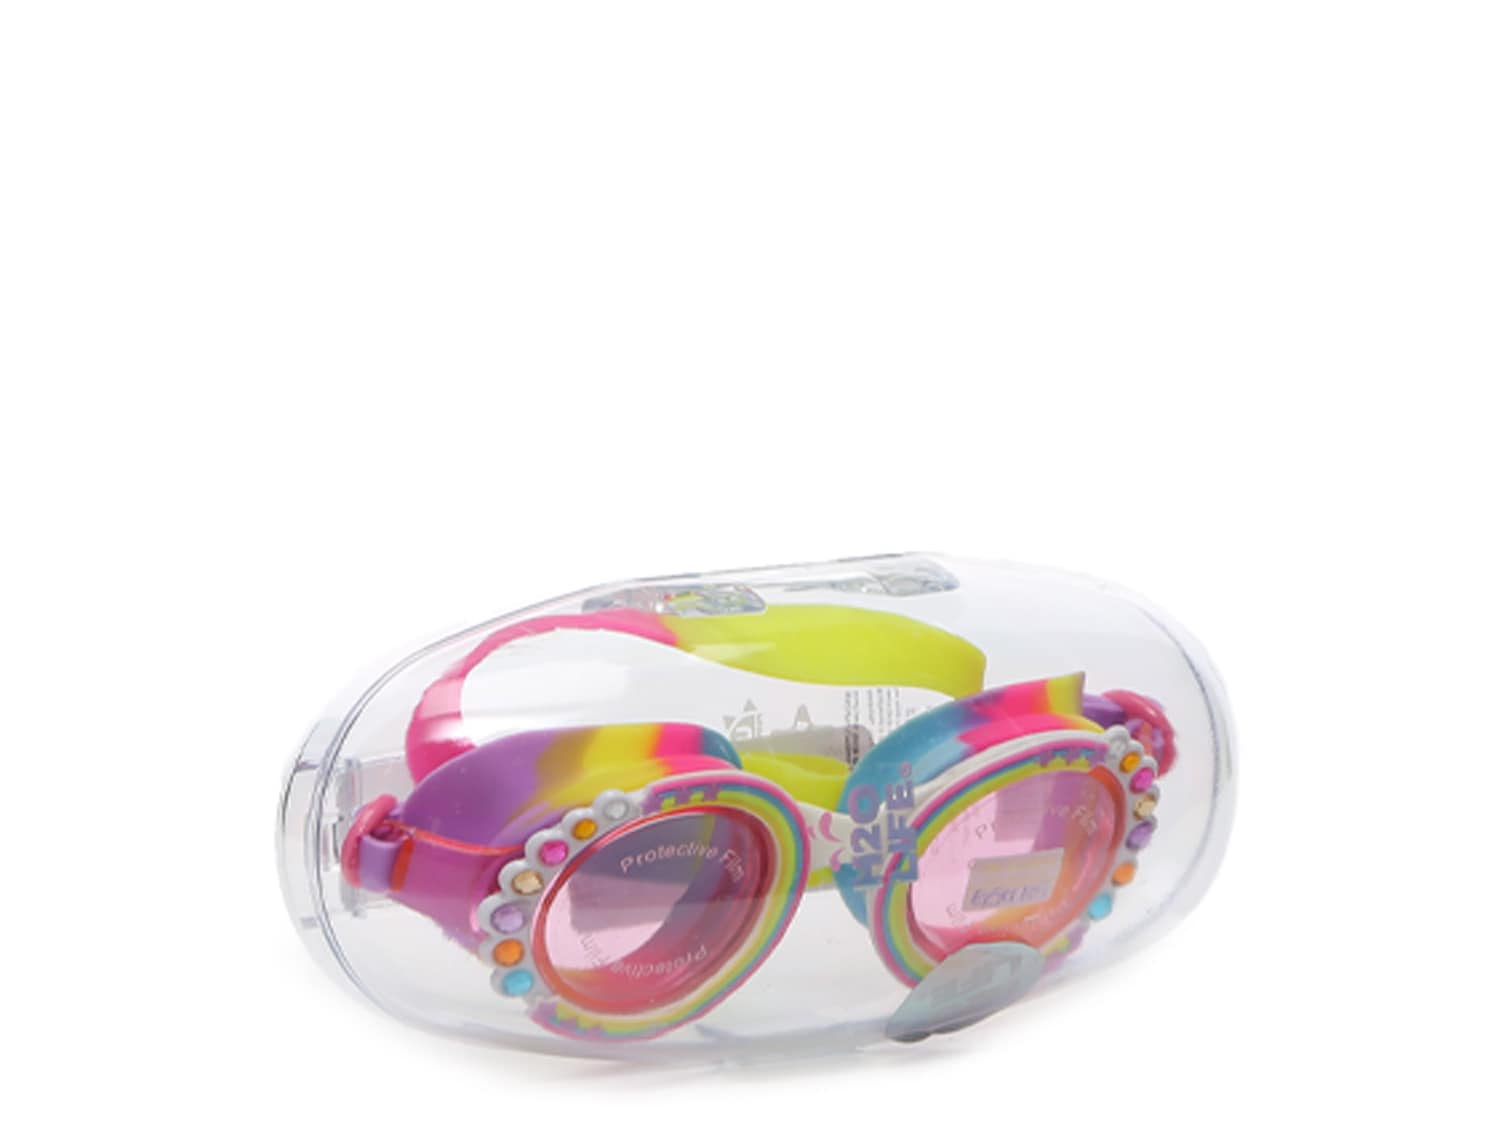 Pan Oceanic Rainbow Bling Kids Swim Goggles and Case